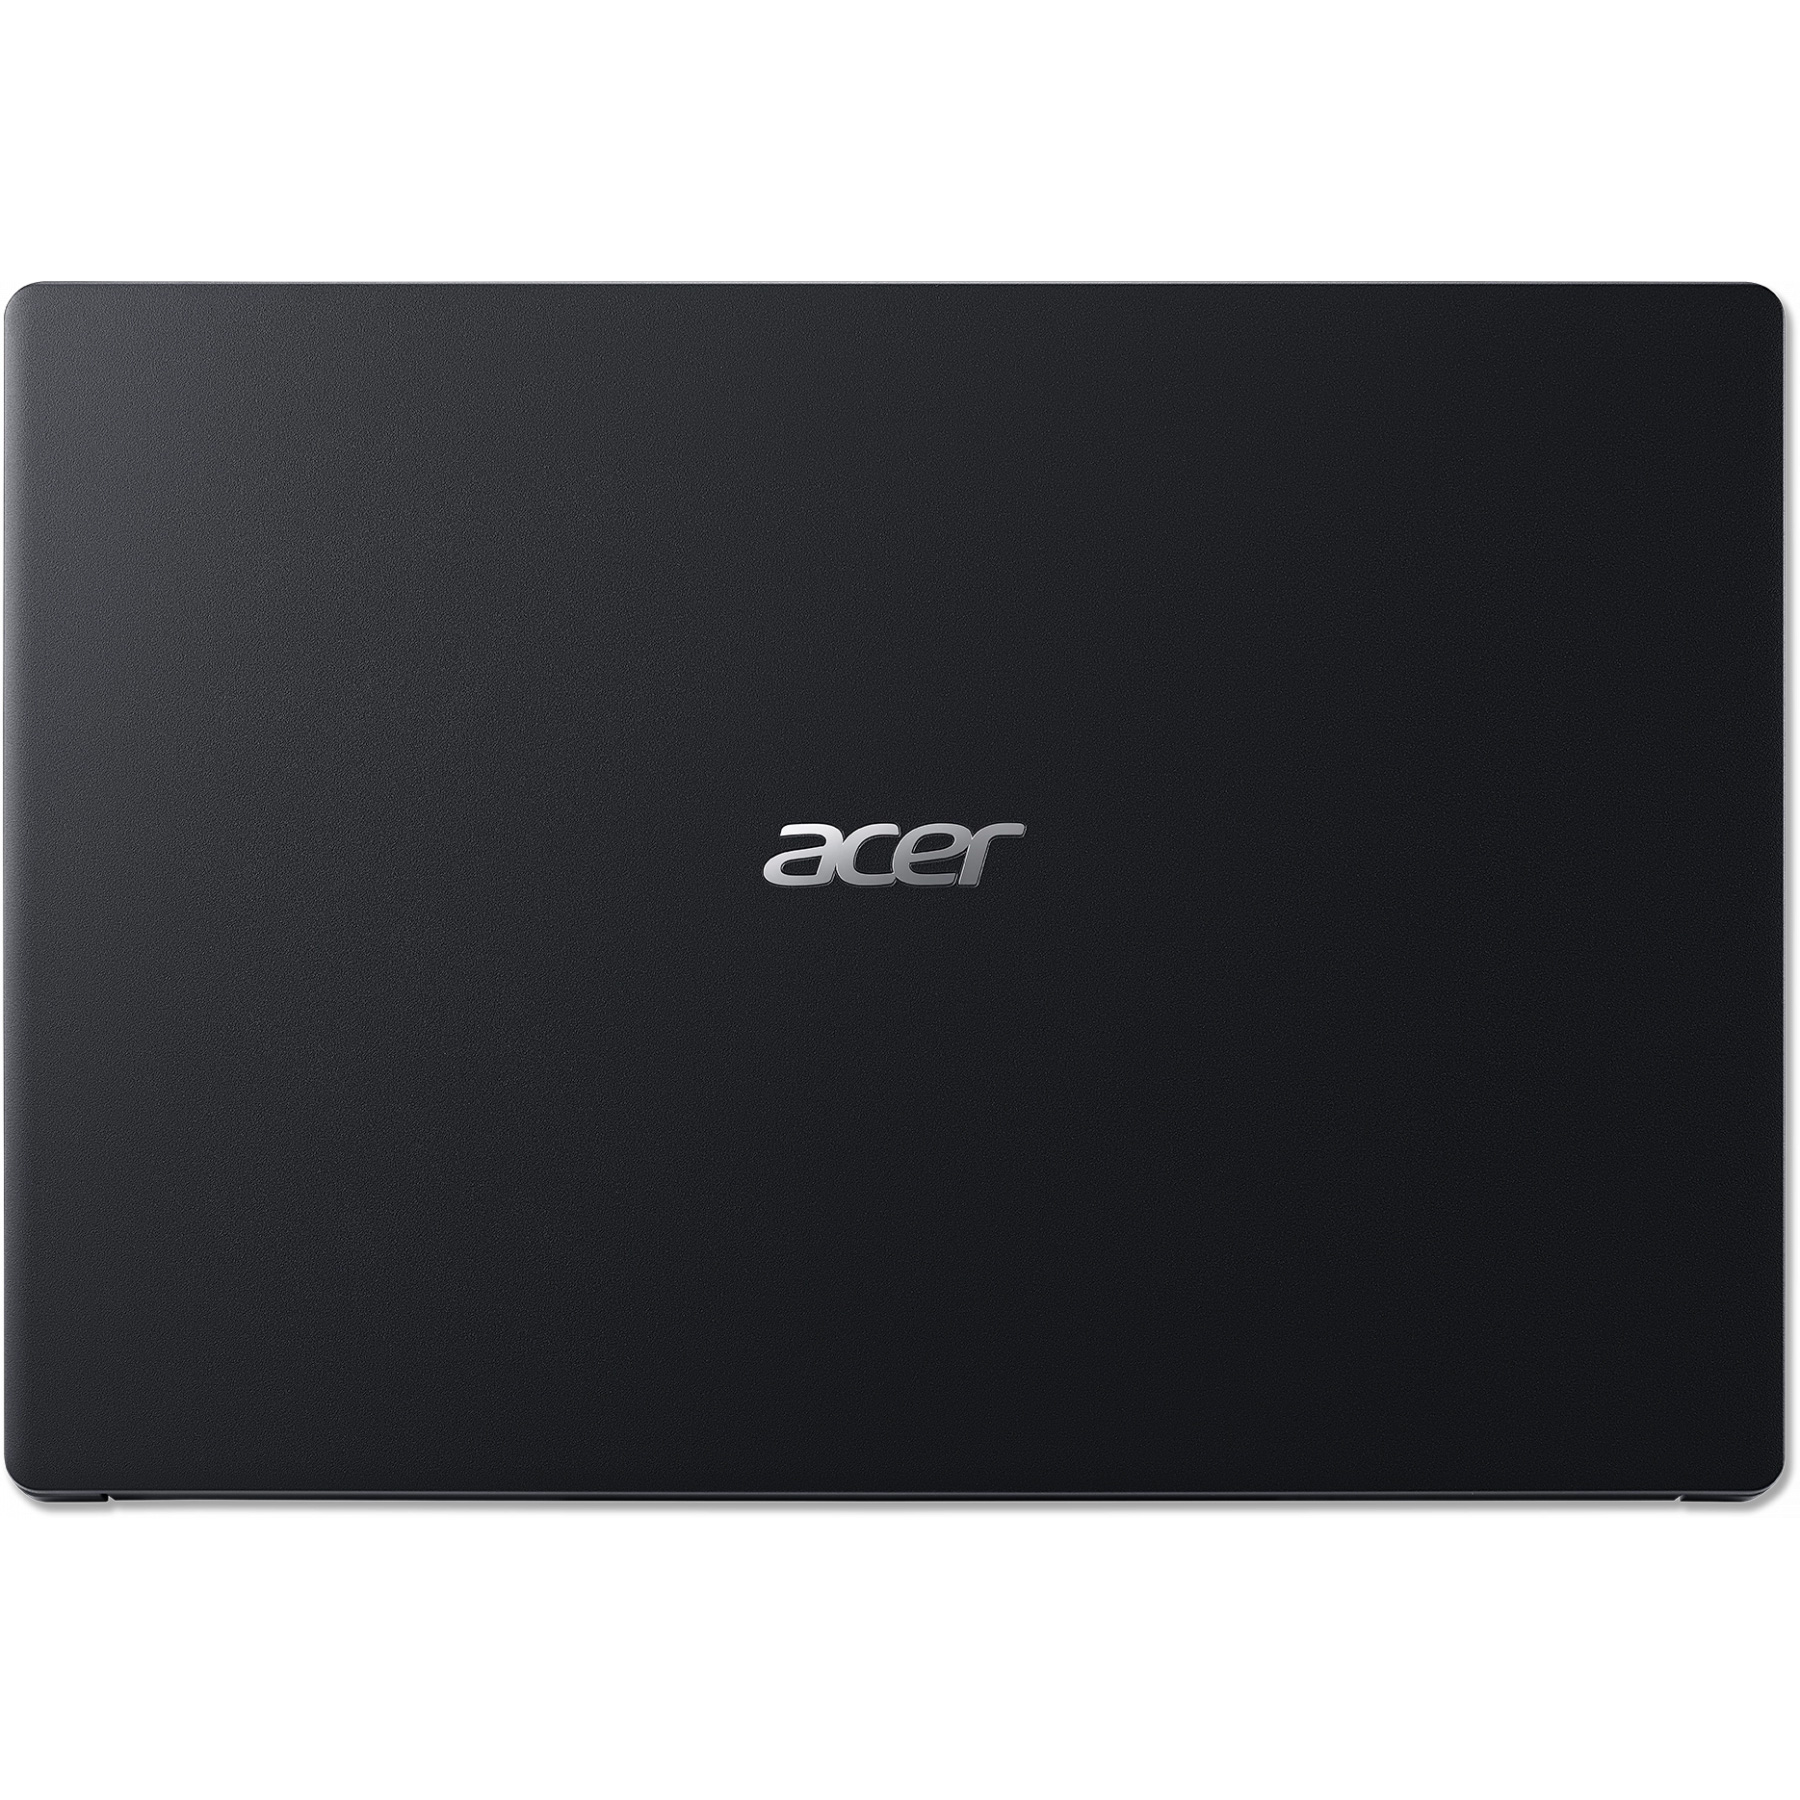 Ноутбук асер 15. Acer Aspire 3 a317-52. Acer Aspire a315-57g. Acer Aspire 3 a315-23g. Ноутбук Acer Aspire 3 a315-57g NX.hzrer.01v.